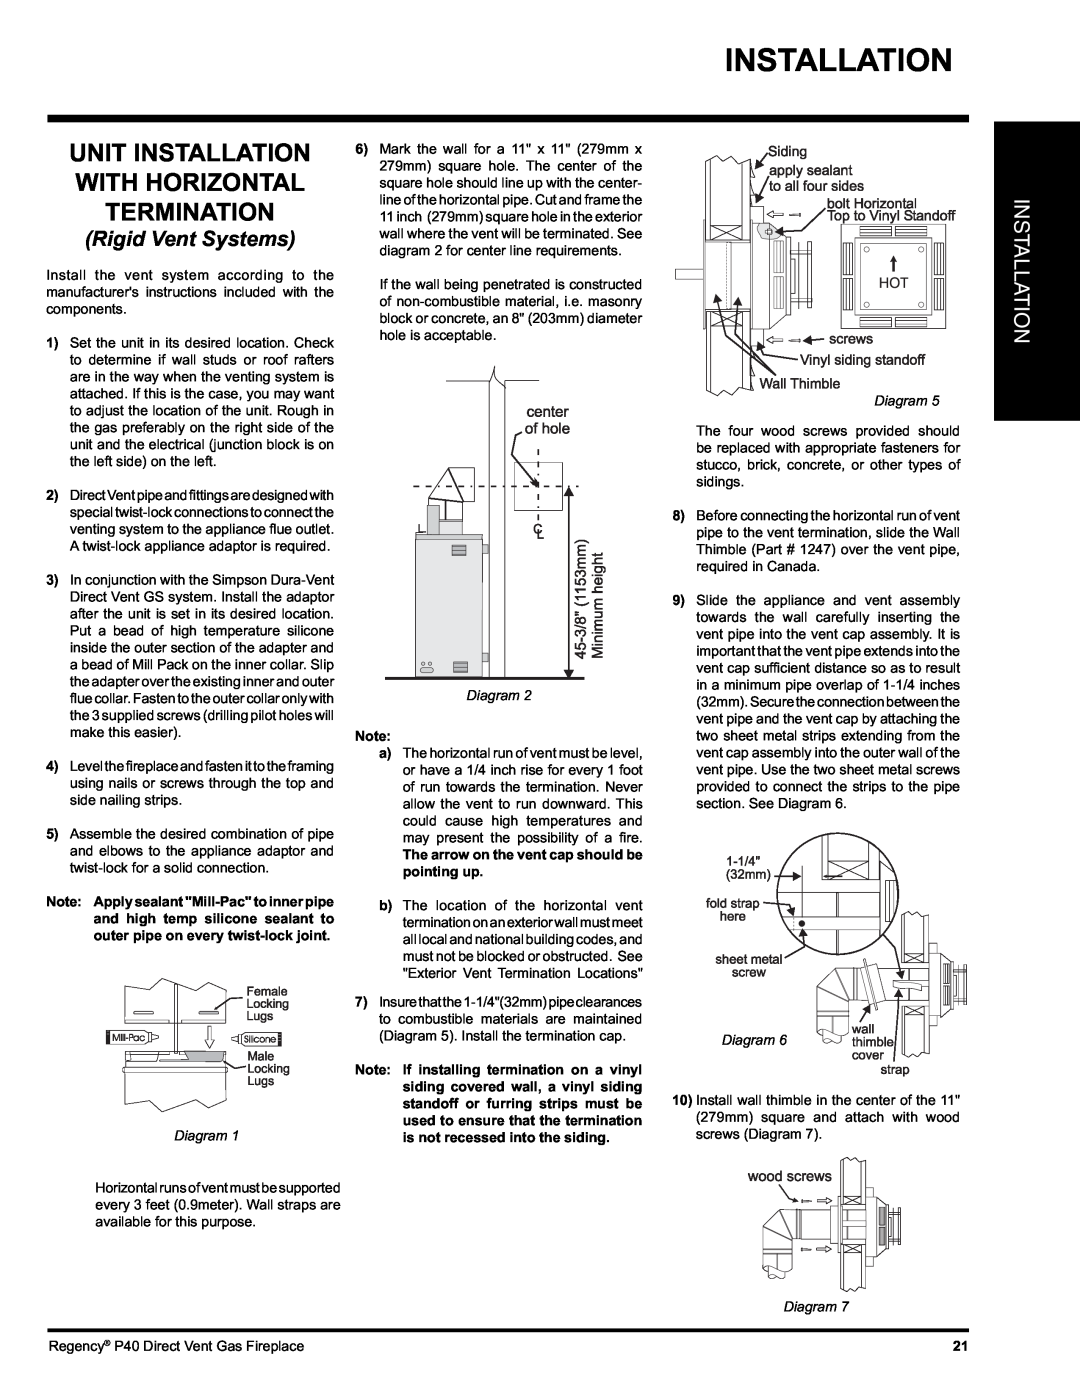 Regency P40-NG, P40-LP installation manual Unit Installation With Horizontal Termination, Rigid Vent Systems, Diagram 